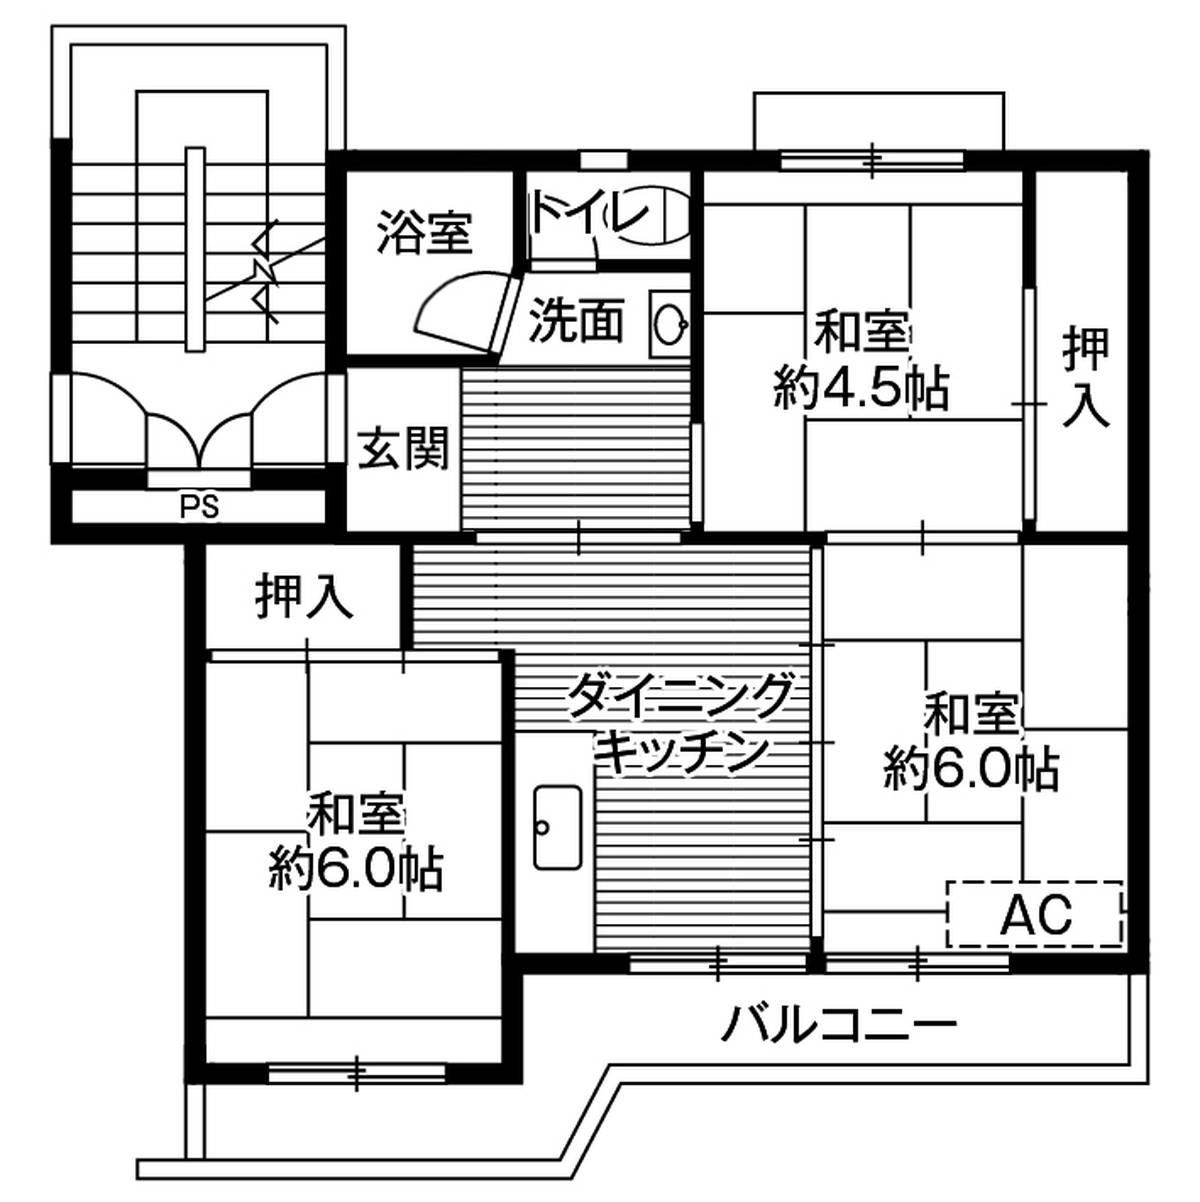 3DK floorplan of Village House Naka Sakurada in Yamagata-shi